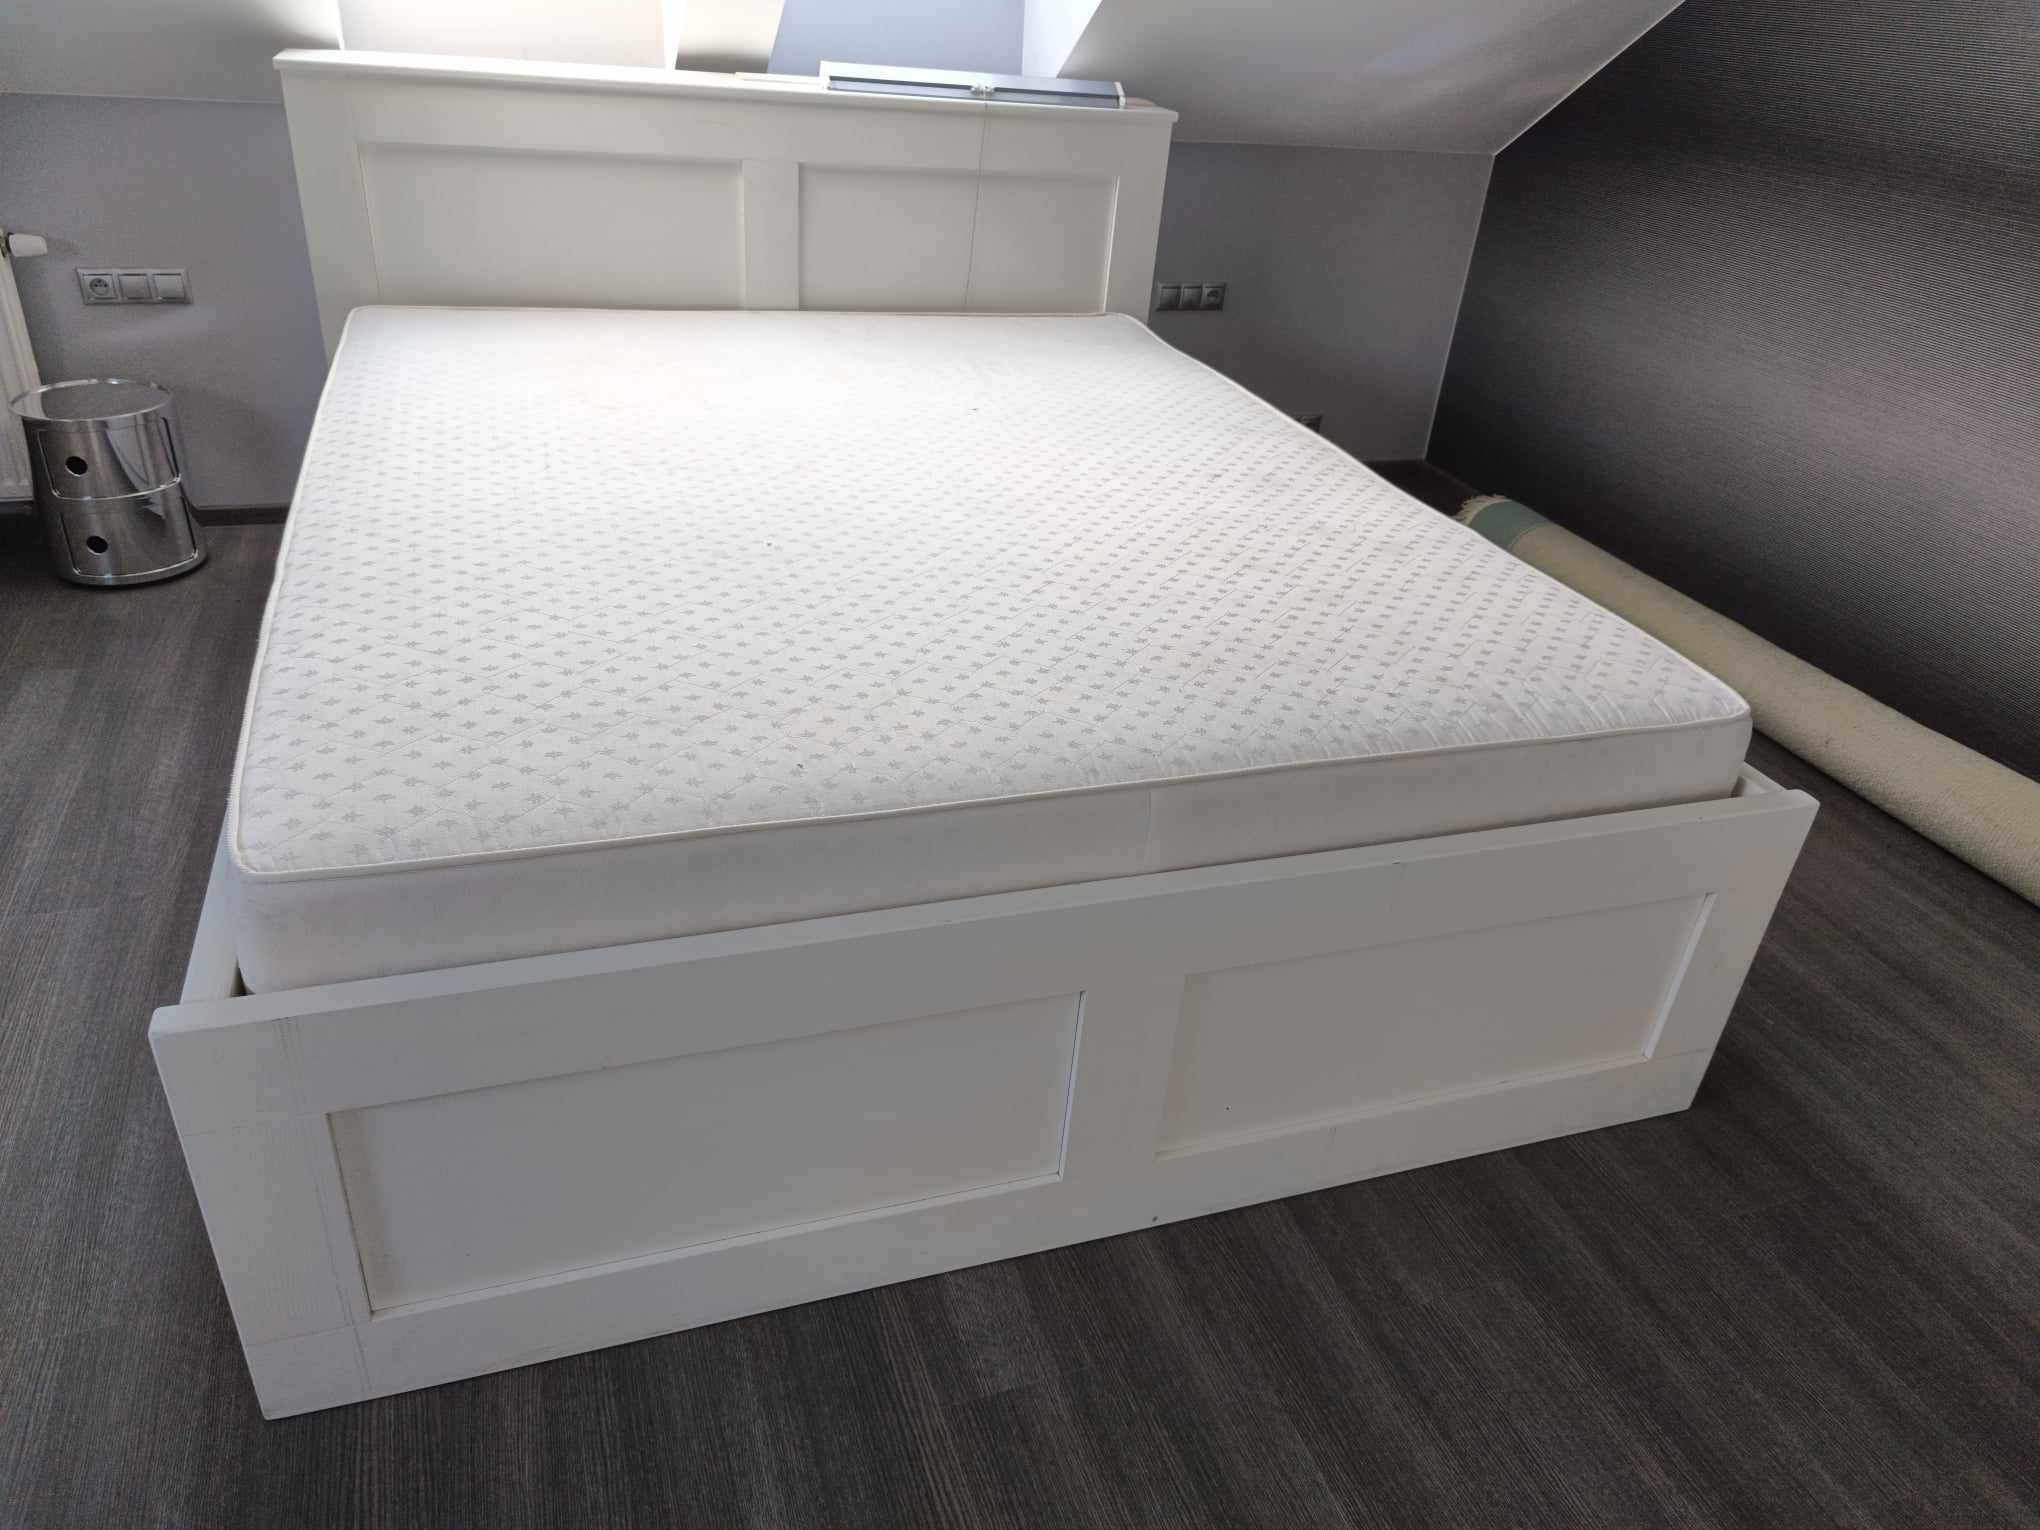 Łóżko drewniane wymiar materaca 220/200(materac gratis)